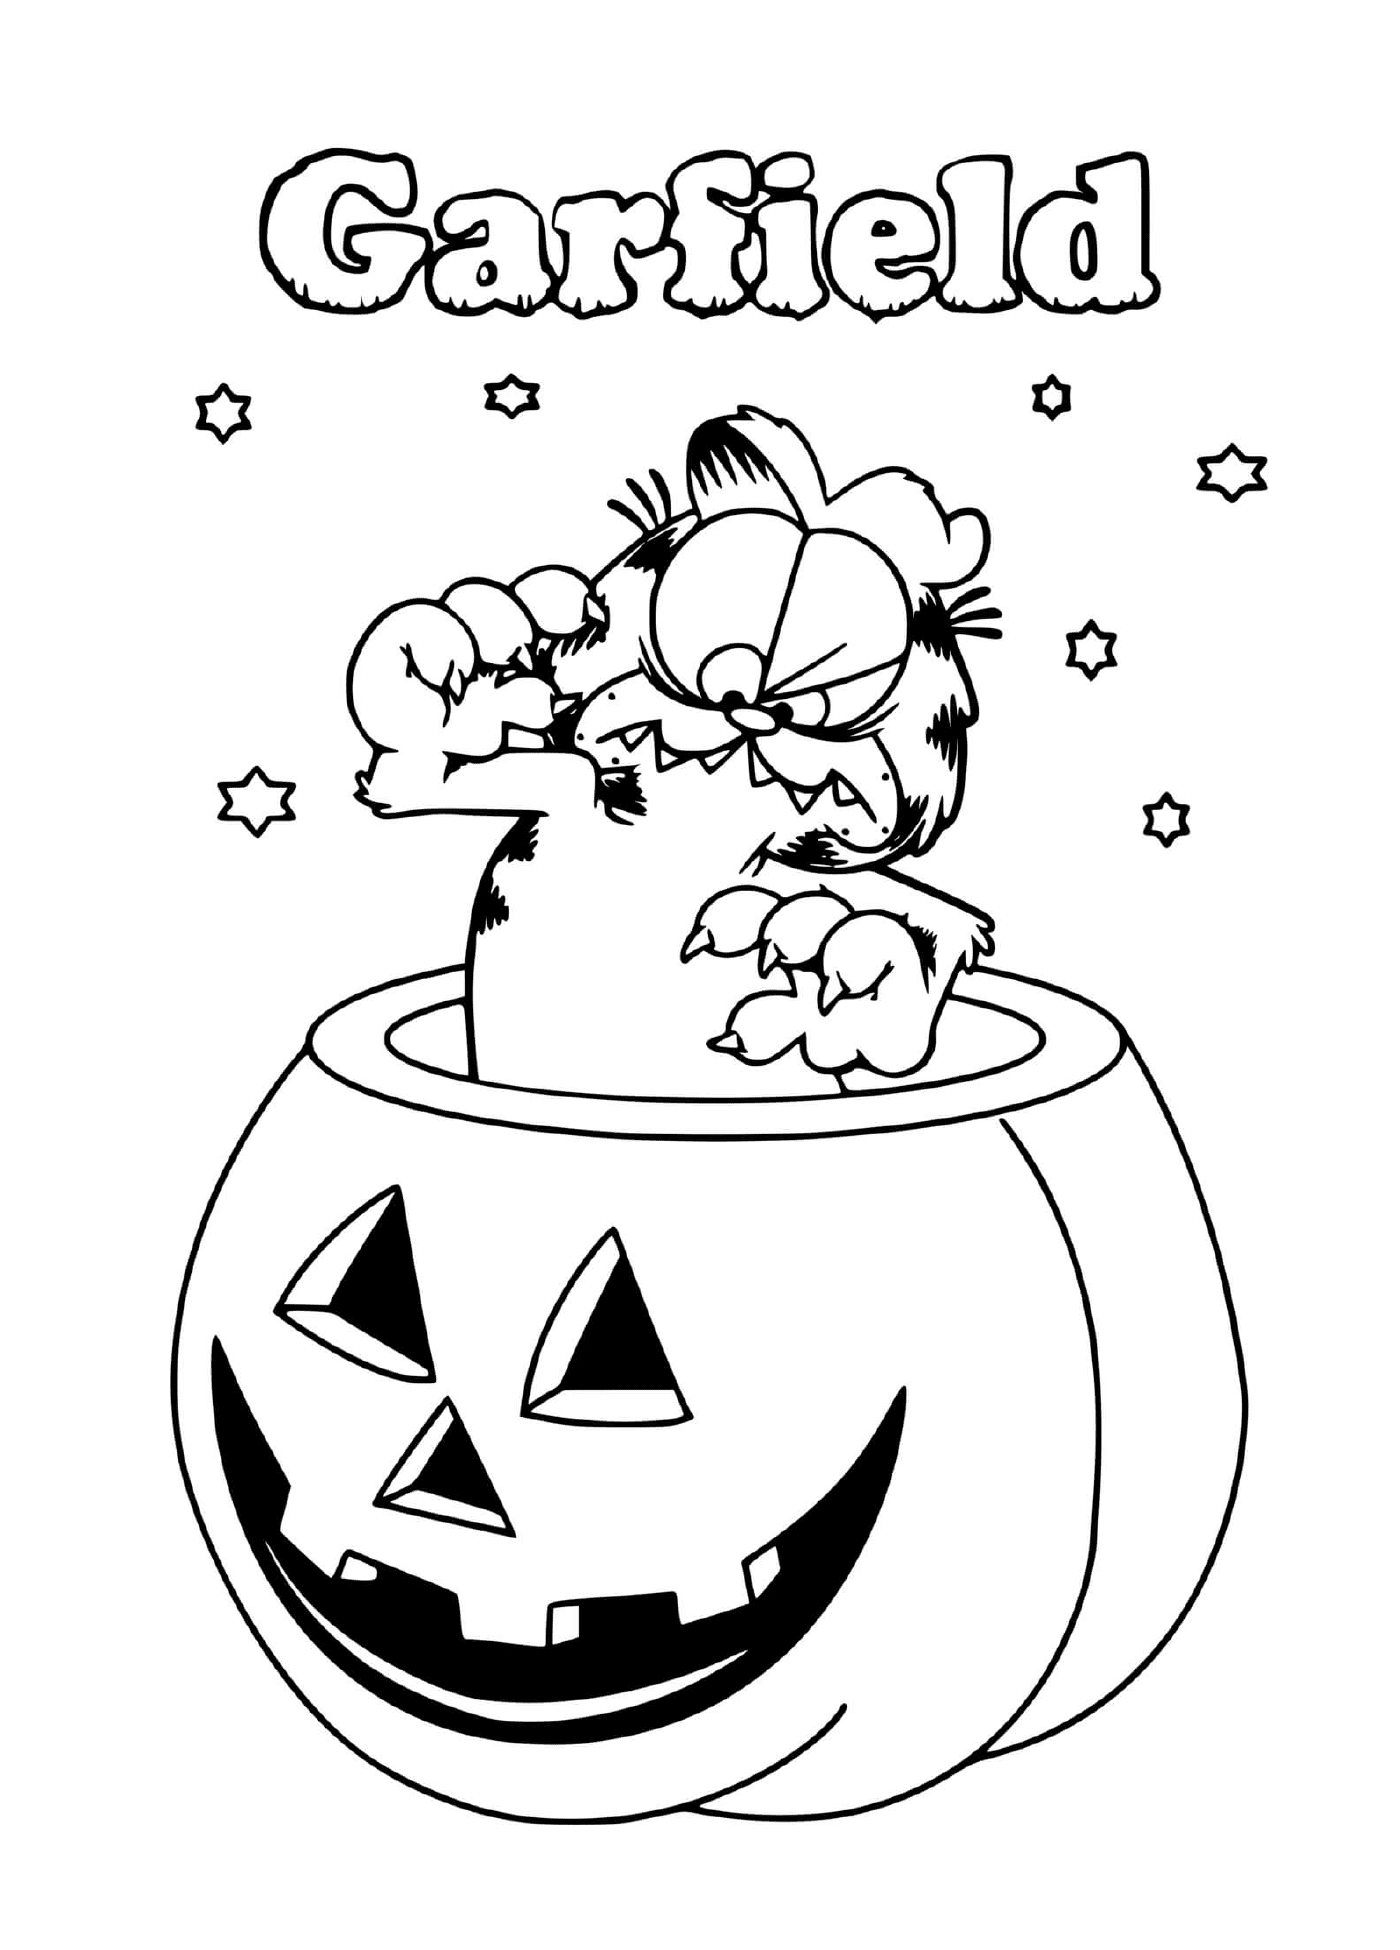  Garfield celebra Halloween em uma abóbora 